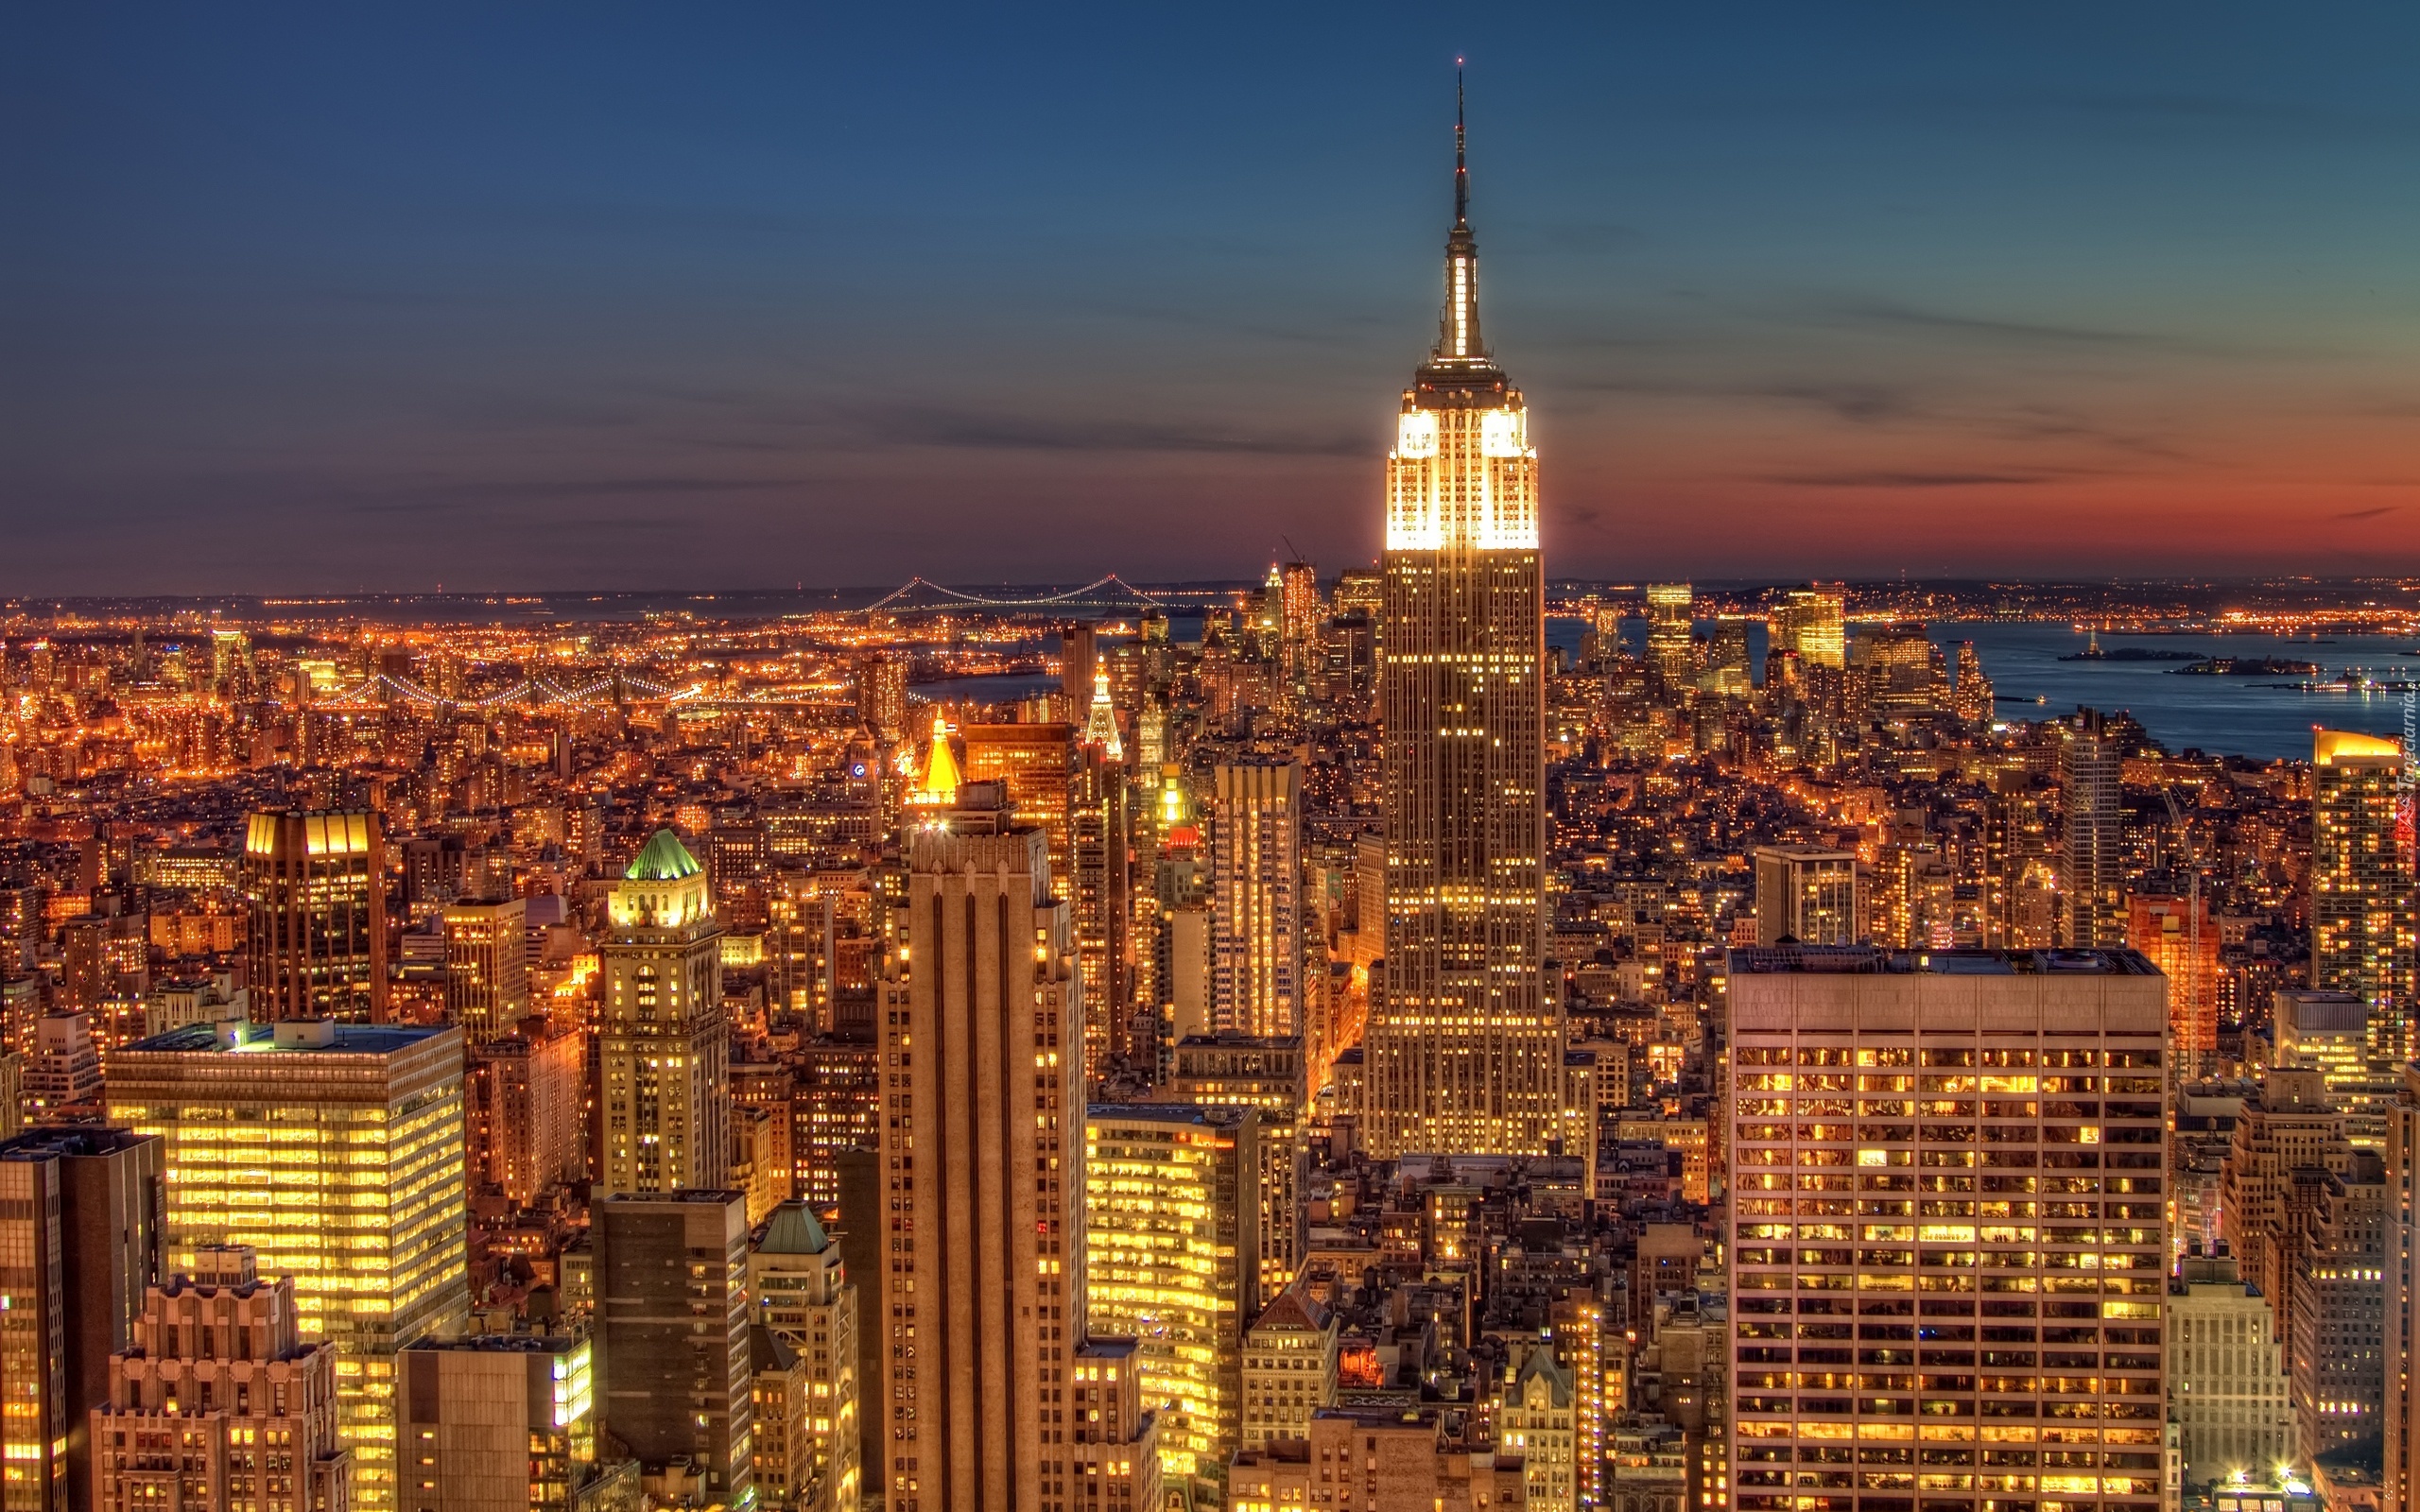 Panorama, Nowego, Jorku, Wieżowce